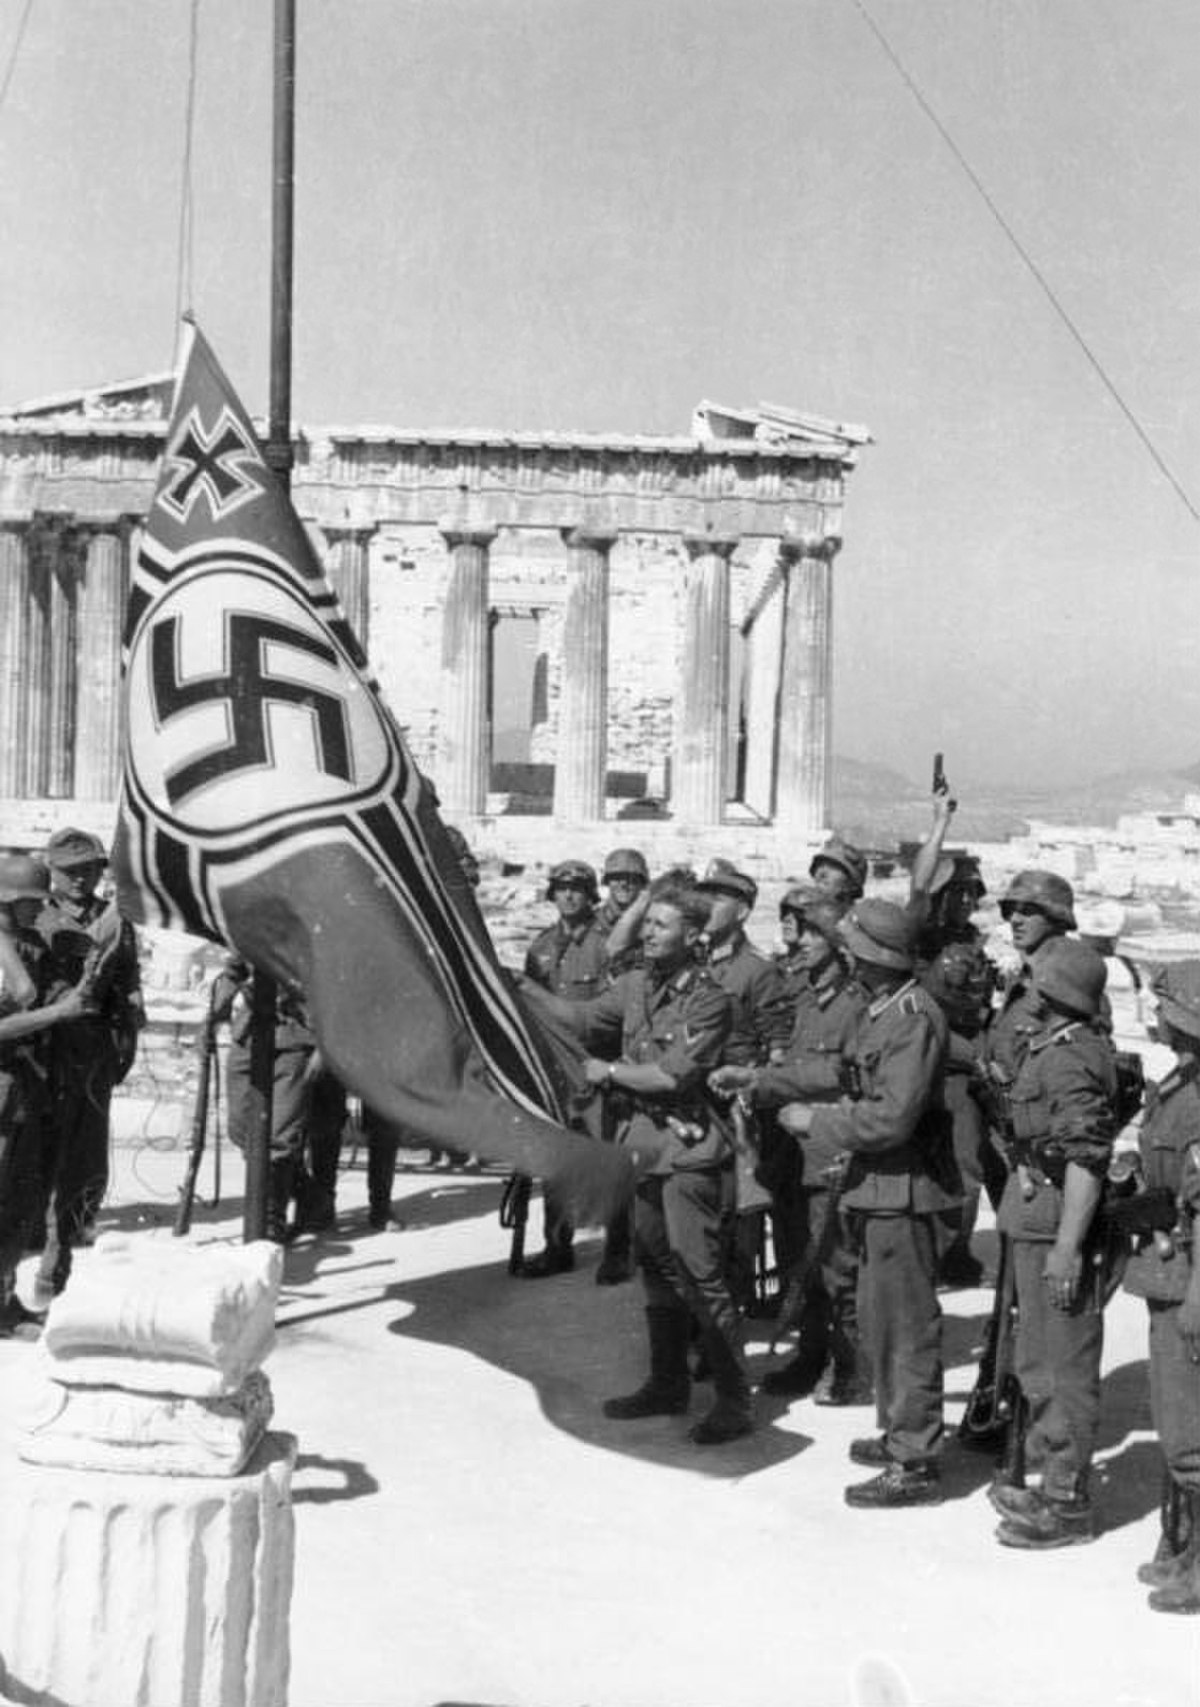 German Invasion of Greece